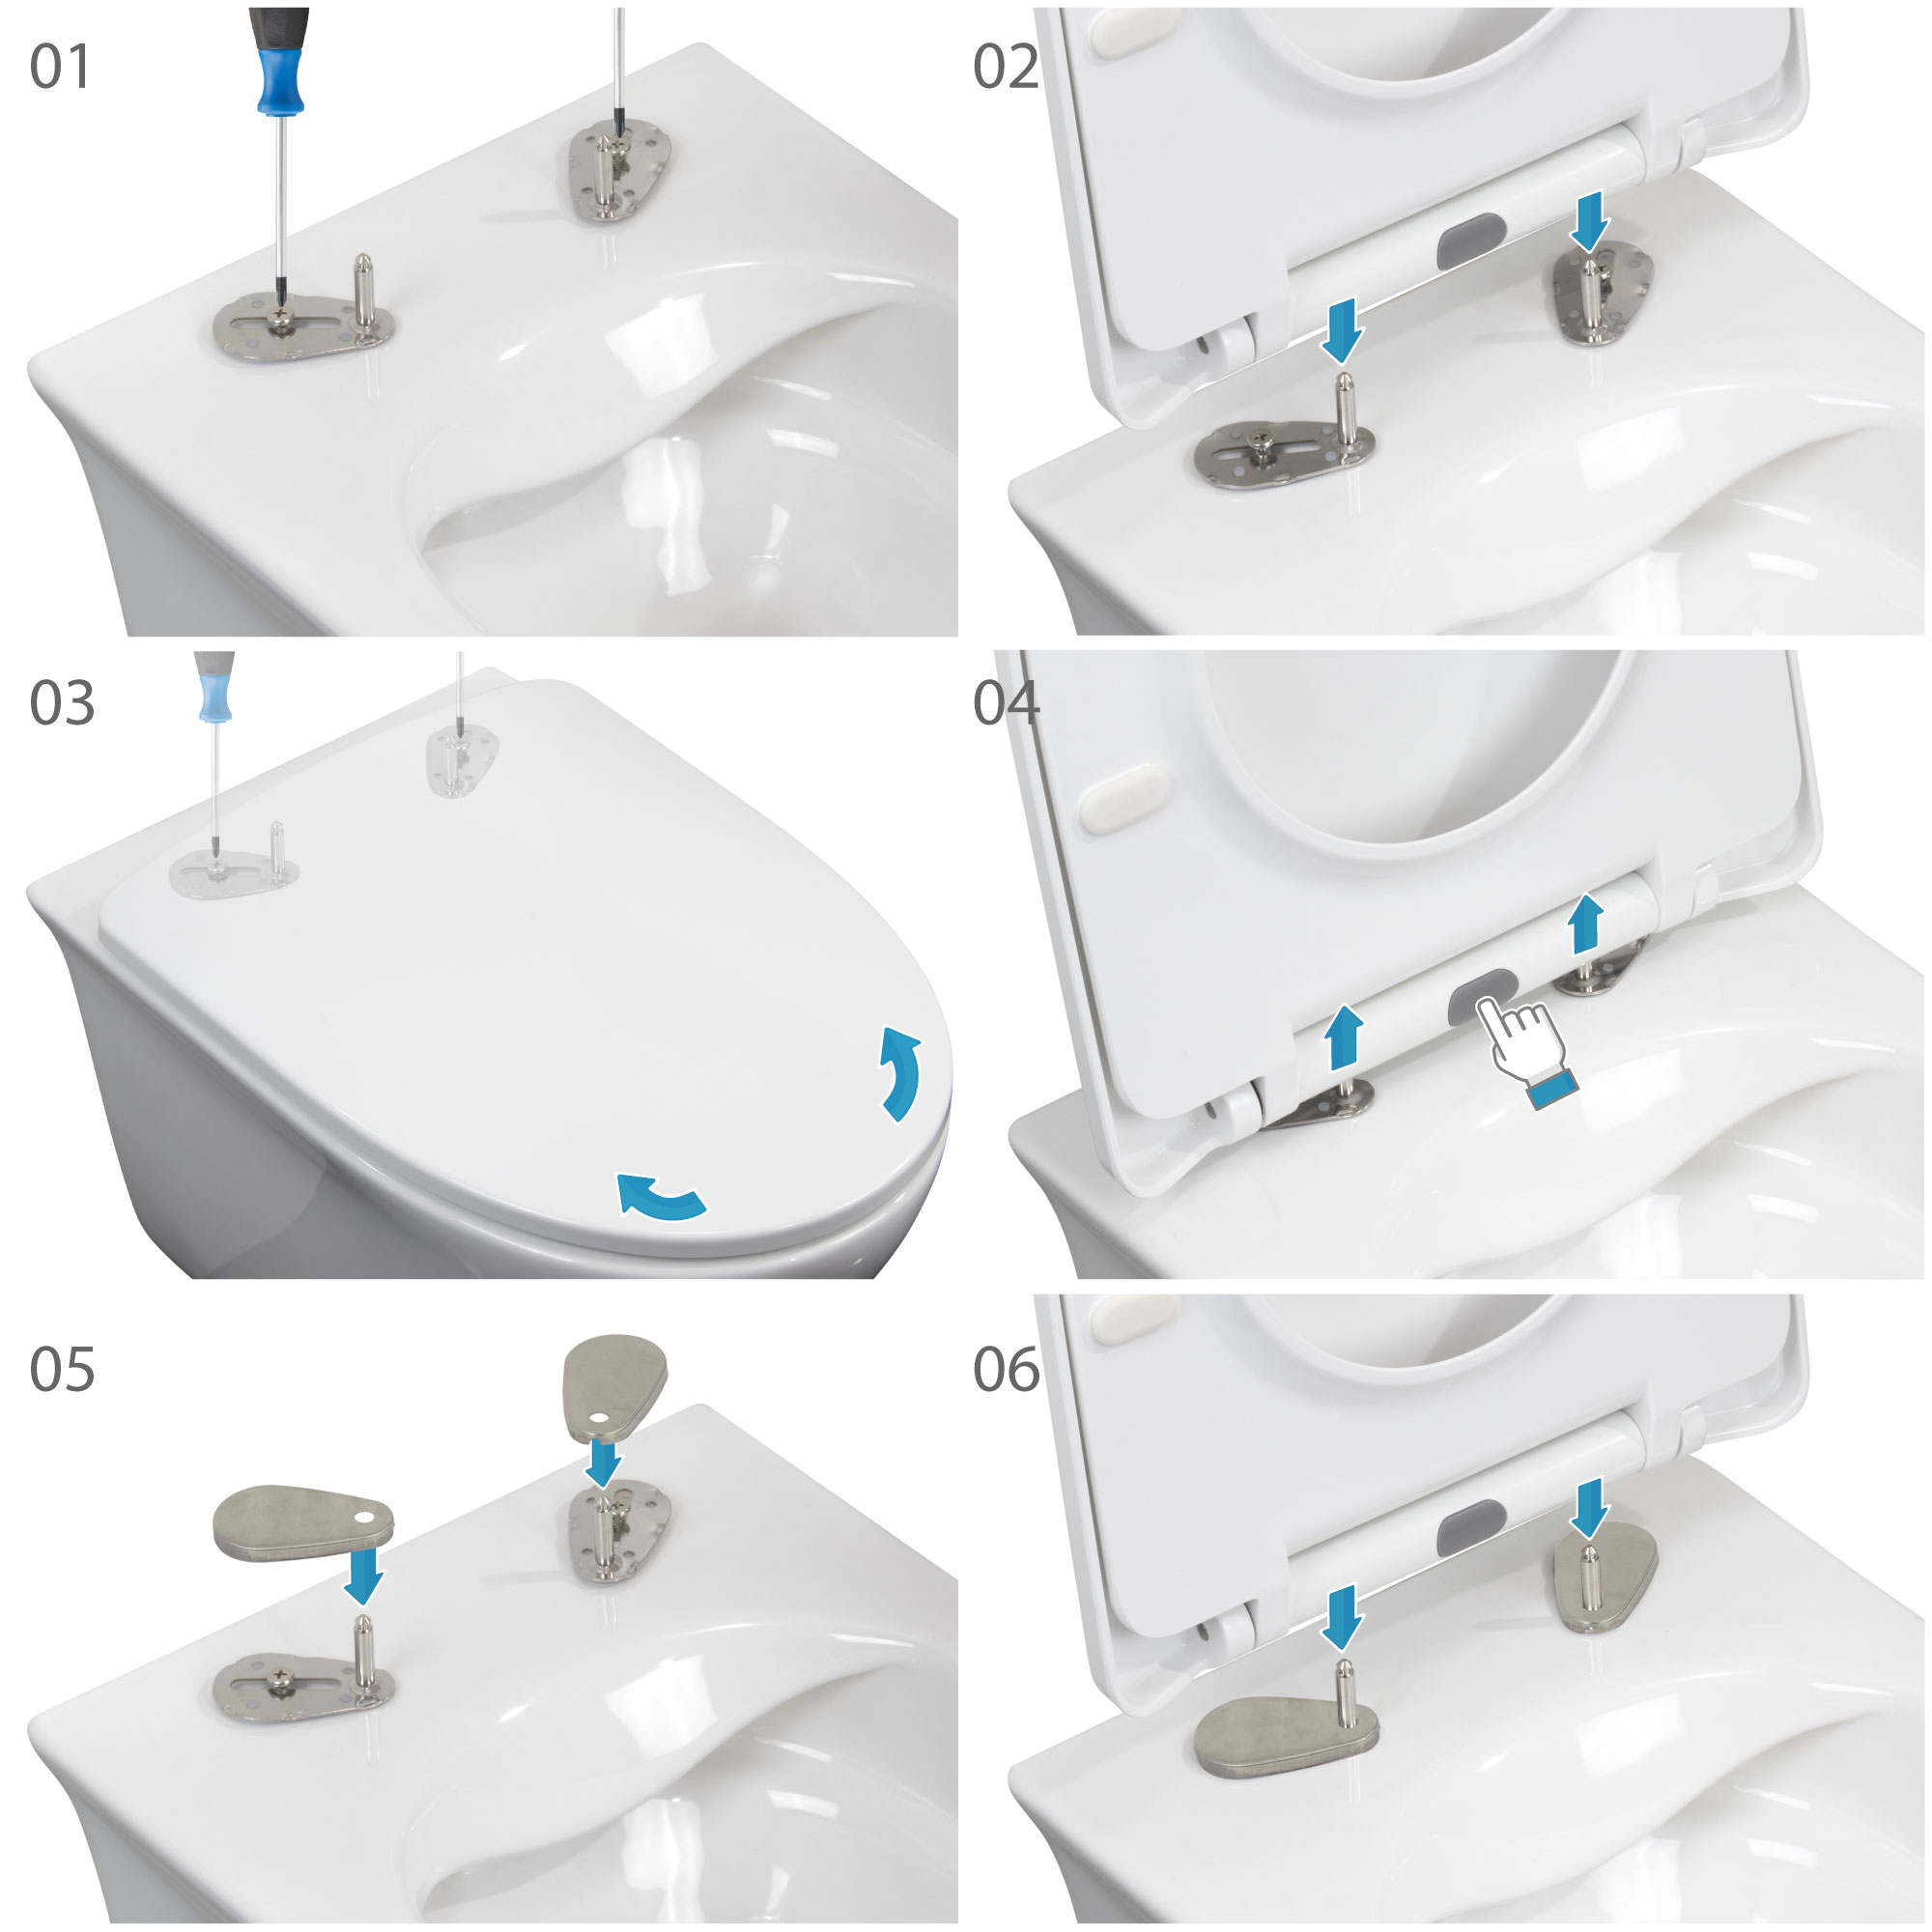 Toilette Hänge WC Spülrandlos inkl. WC Sitz mit Softclose Absenkautomatik + abnehmbar Dora